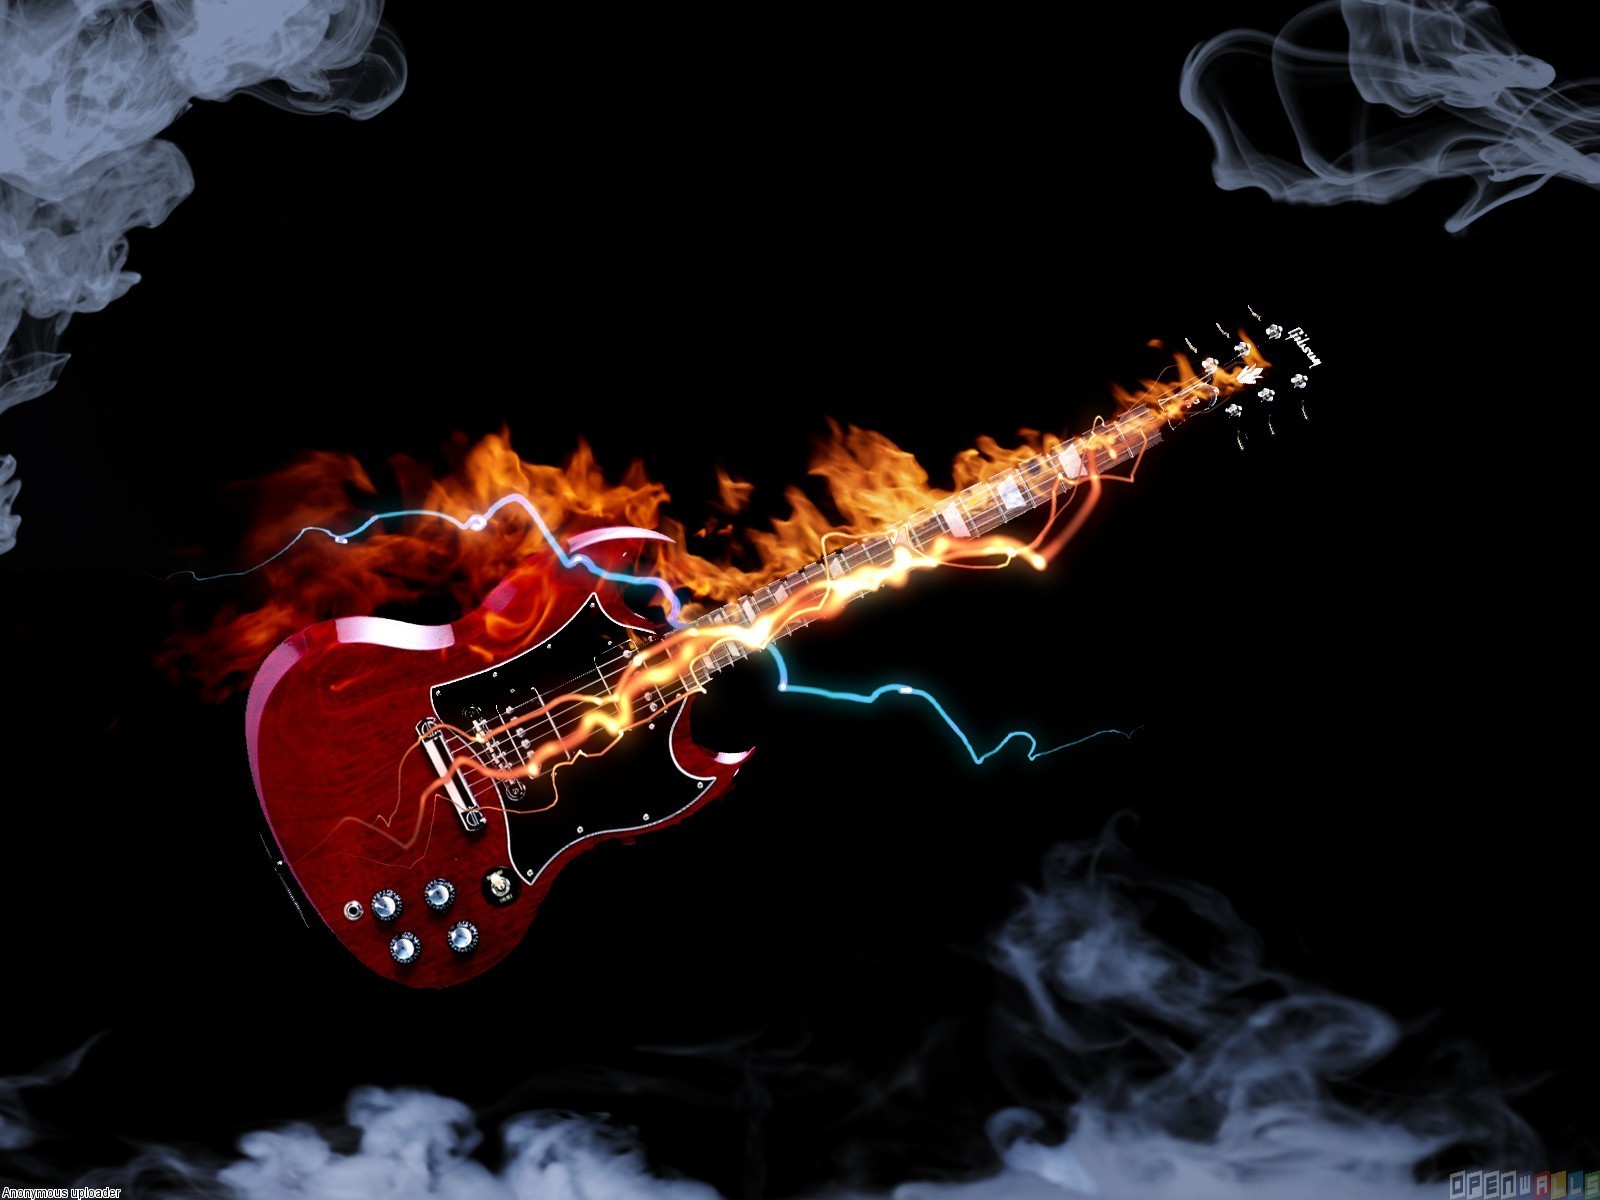 Guitar in fire wallpaper - Open Walls